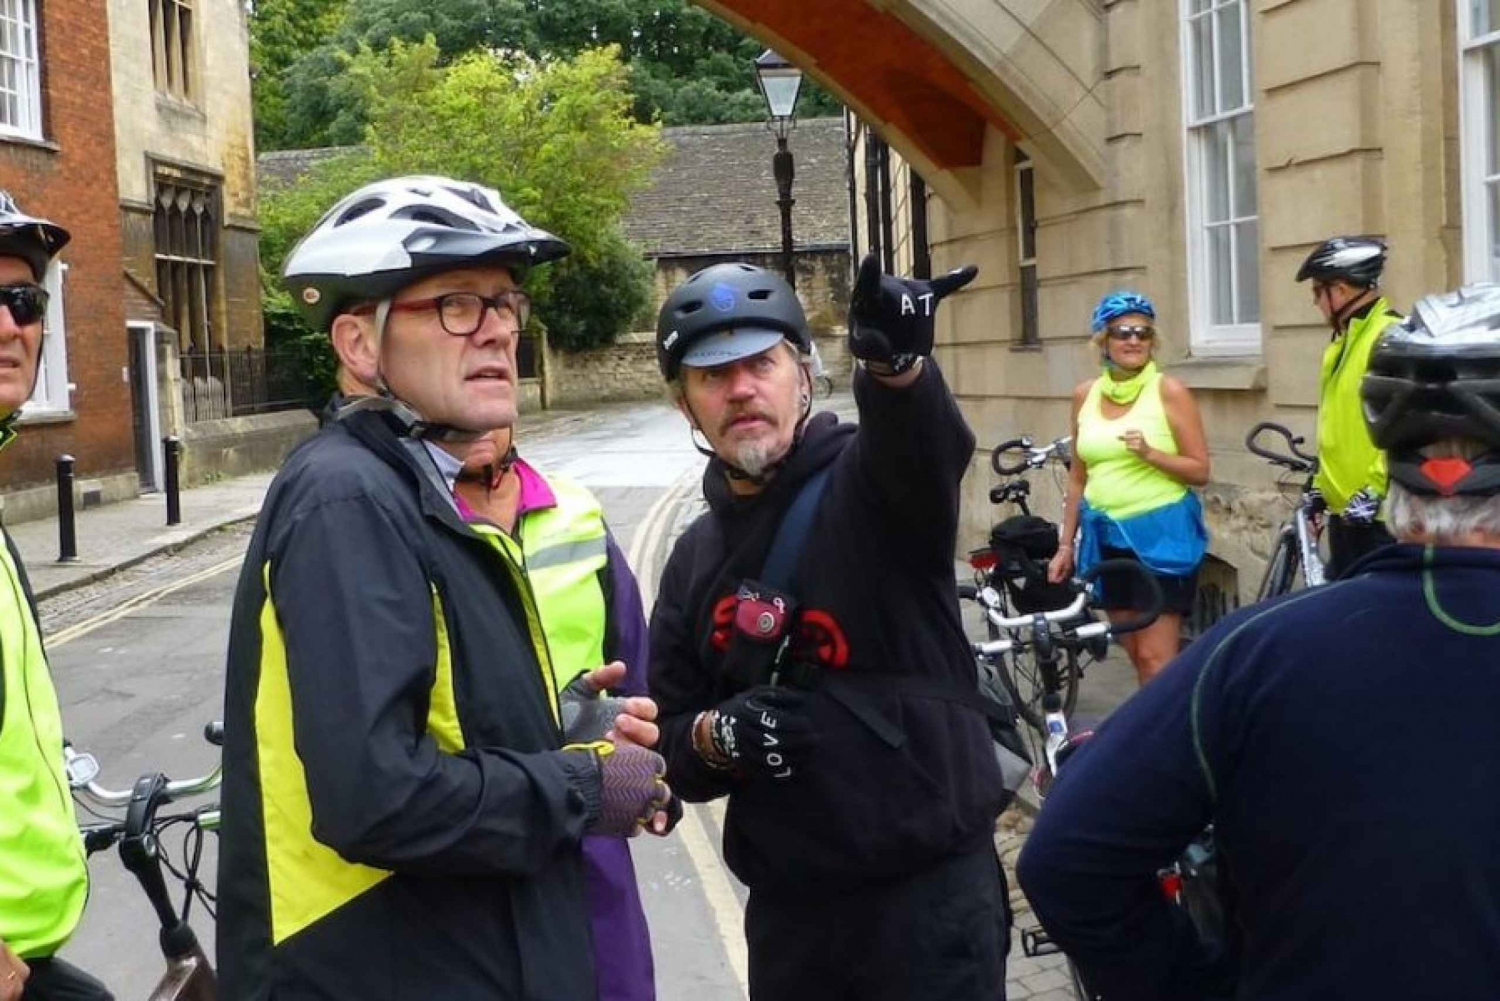 Oxford: Fahrradtour mit lokalem Guide